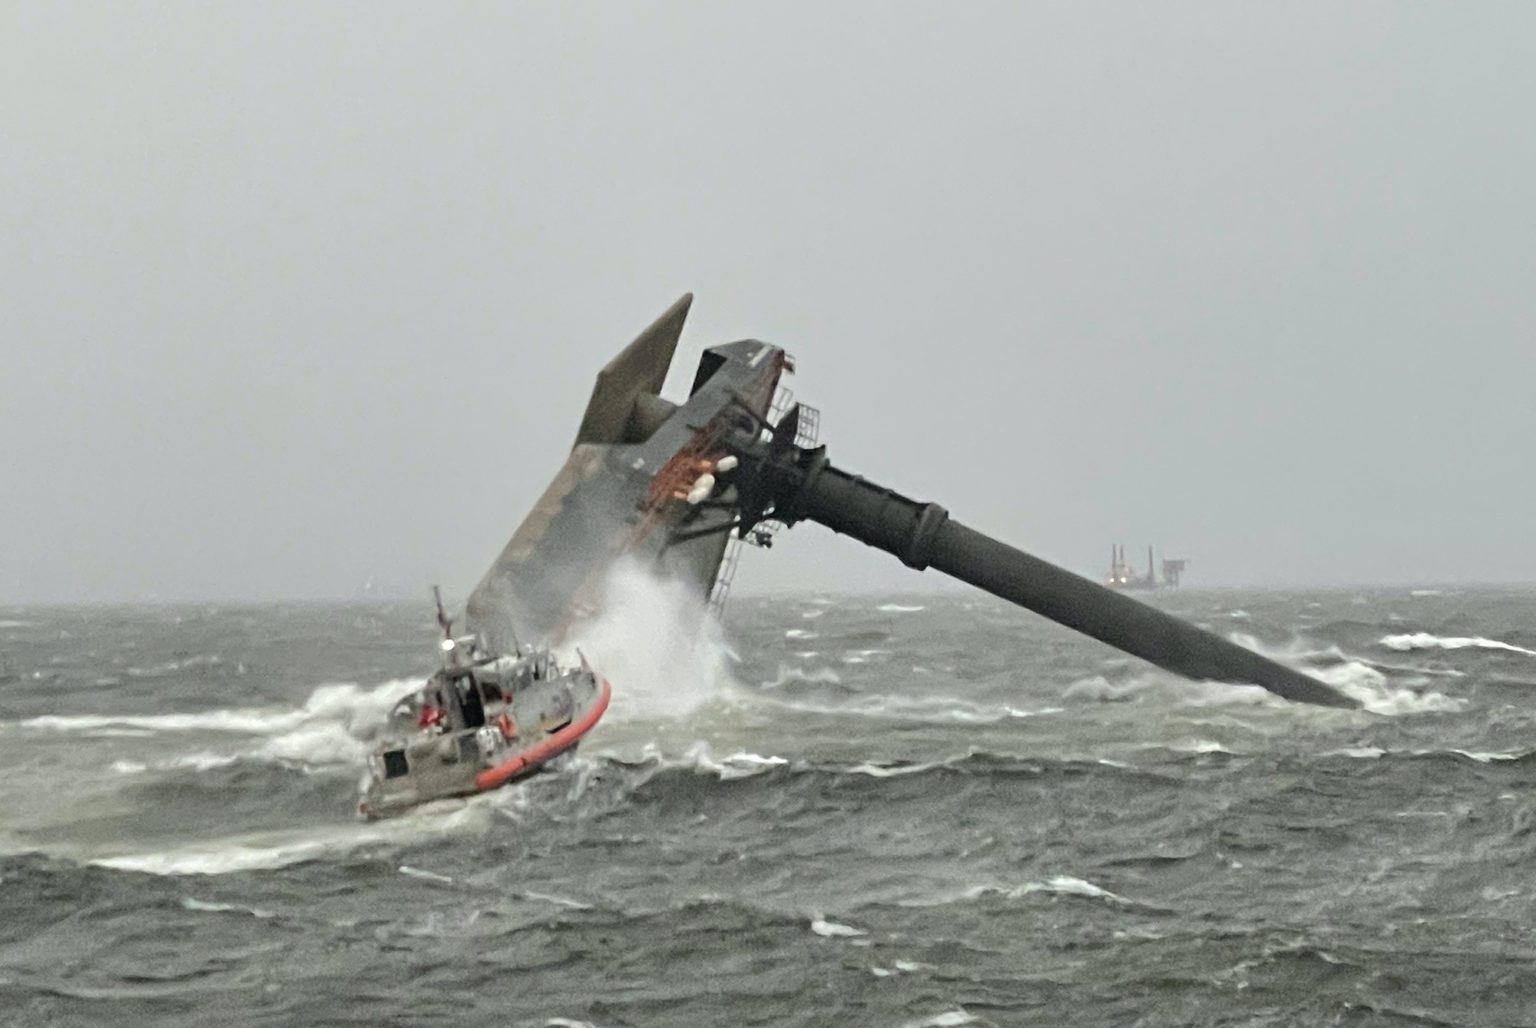 lift-boat-capsized-1536x1028.jpg